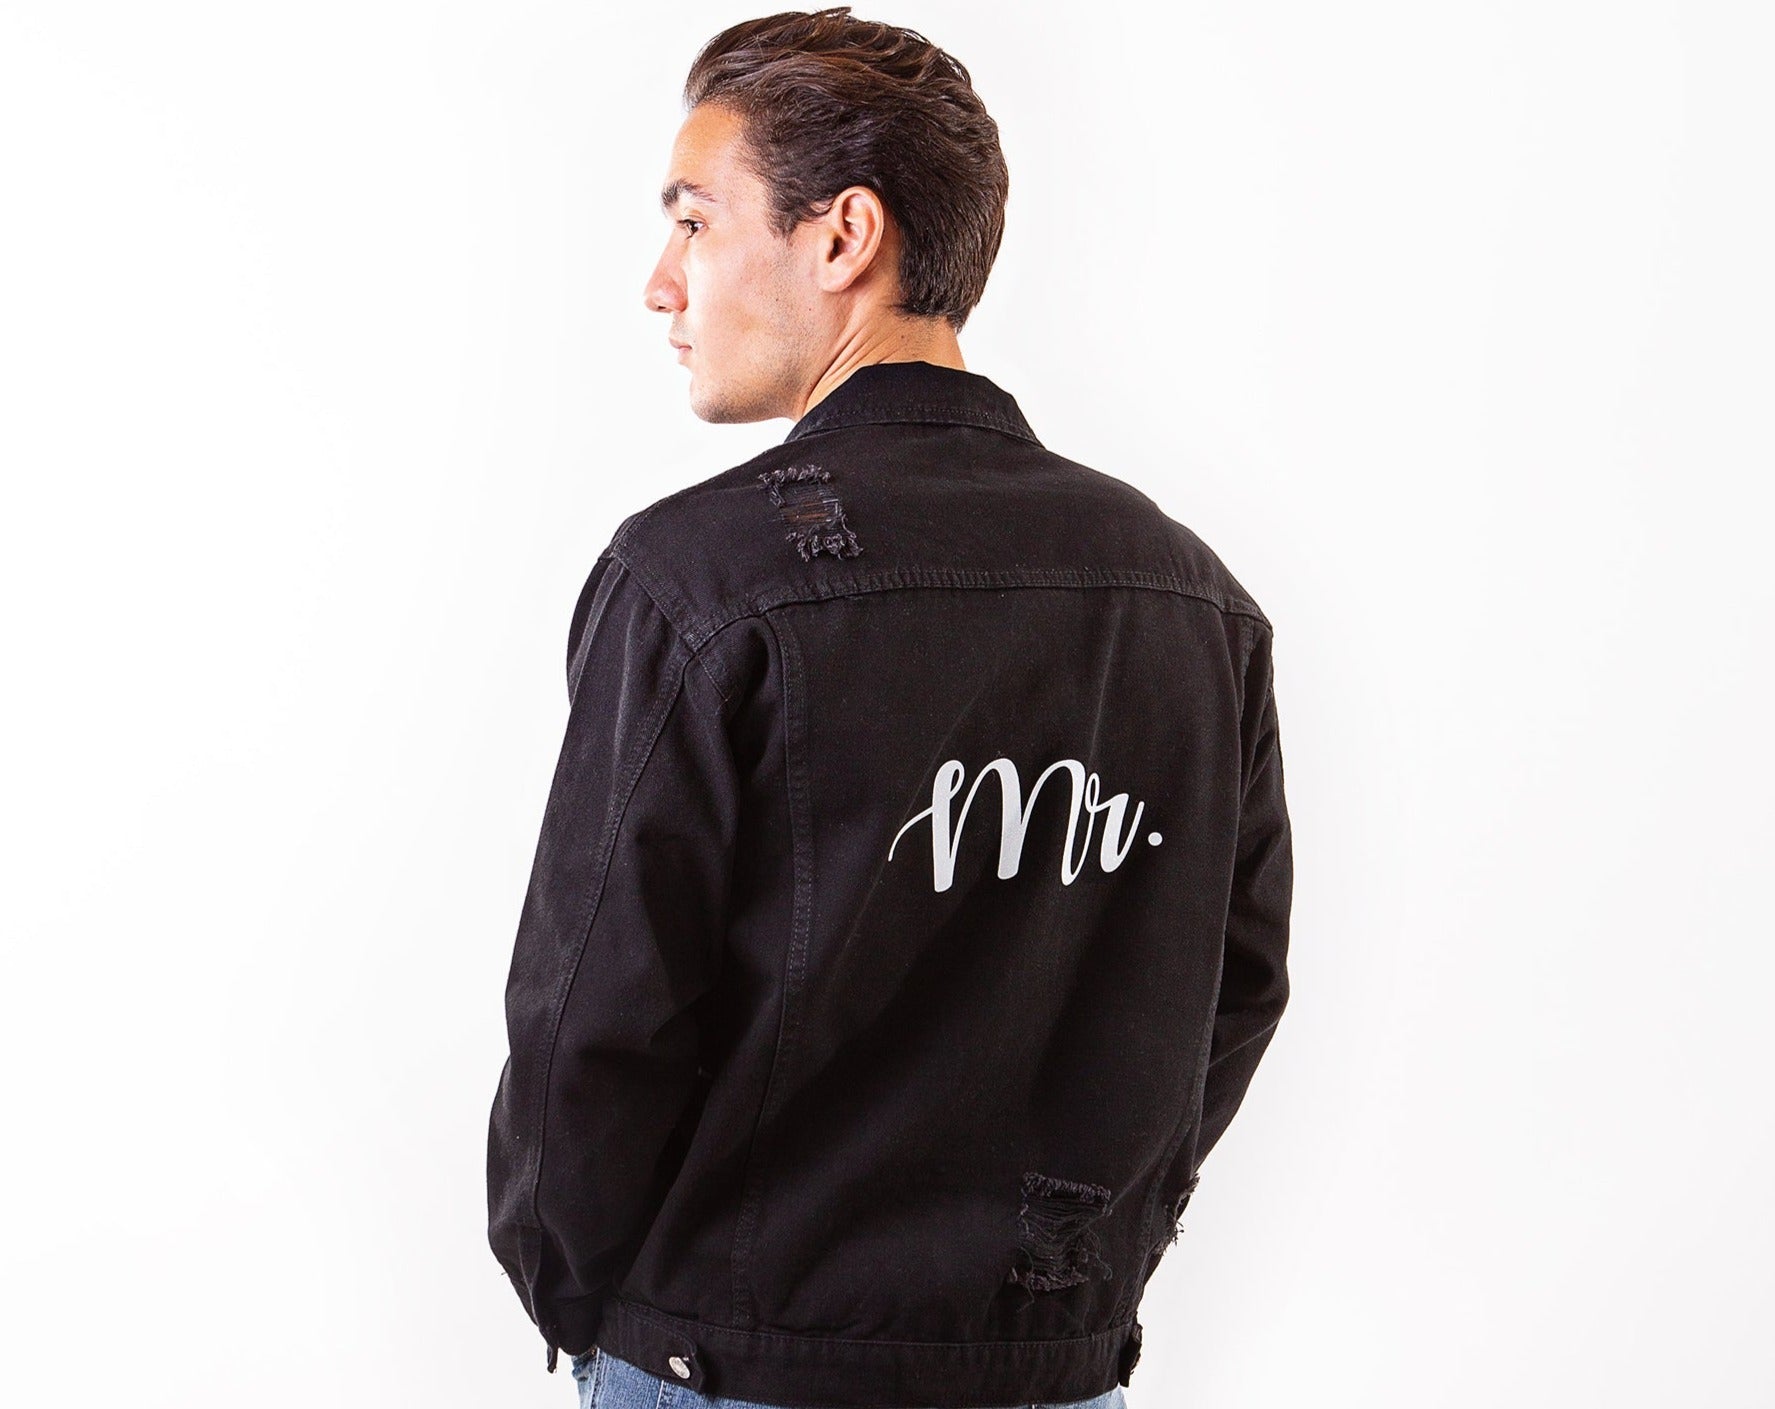 wholesale black ripped jean jacket mens| Alibaba.com